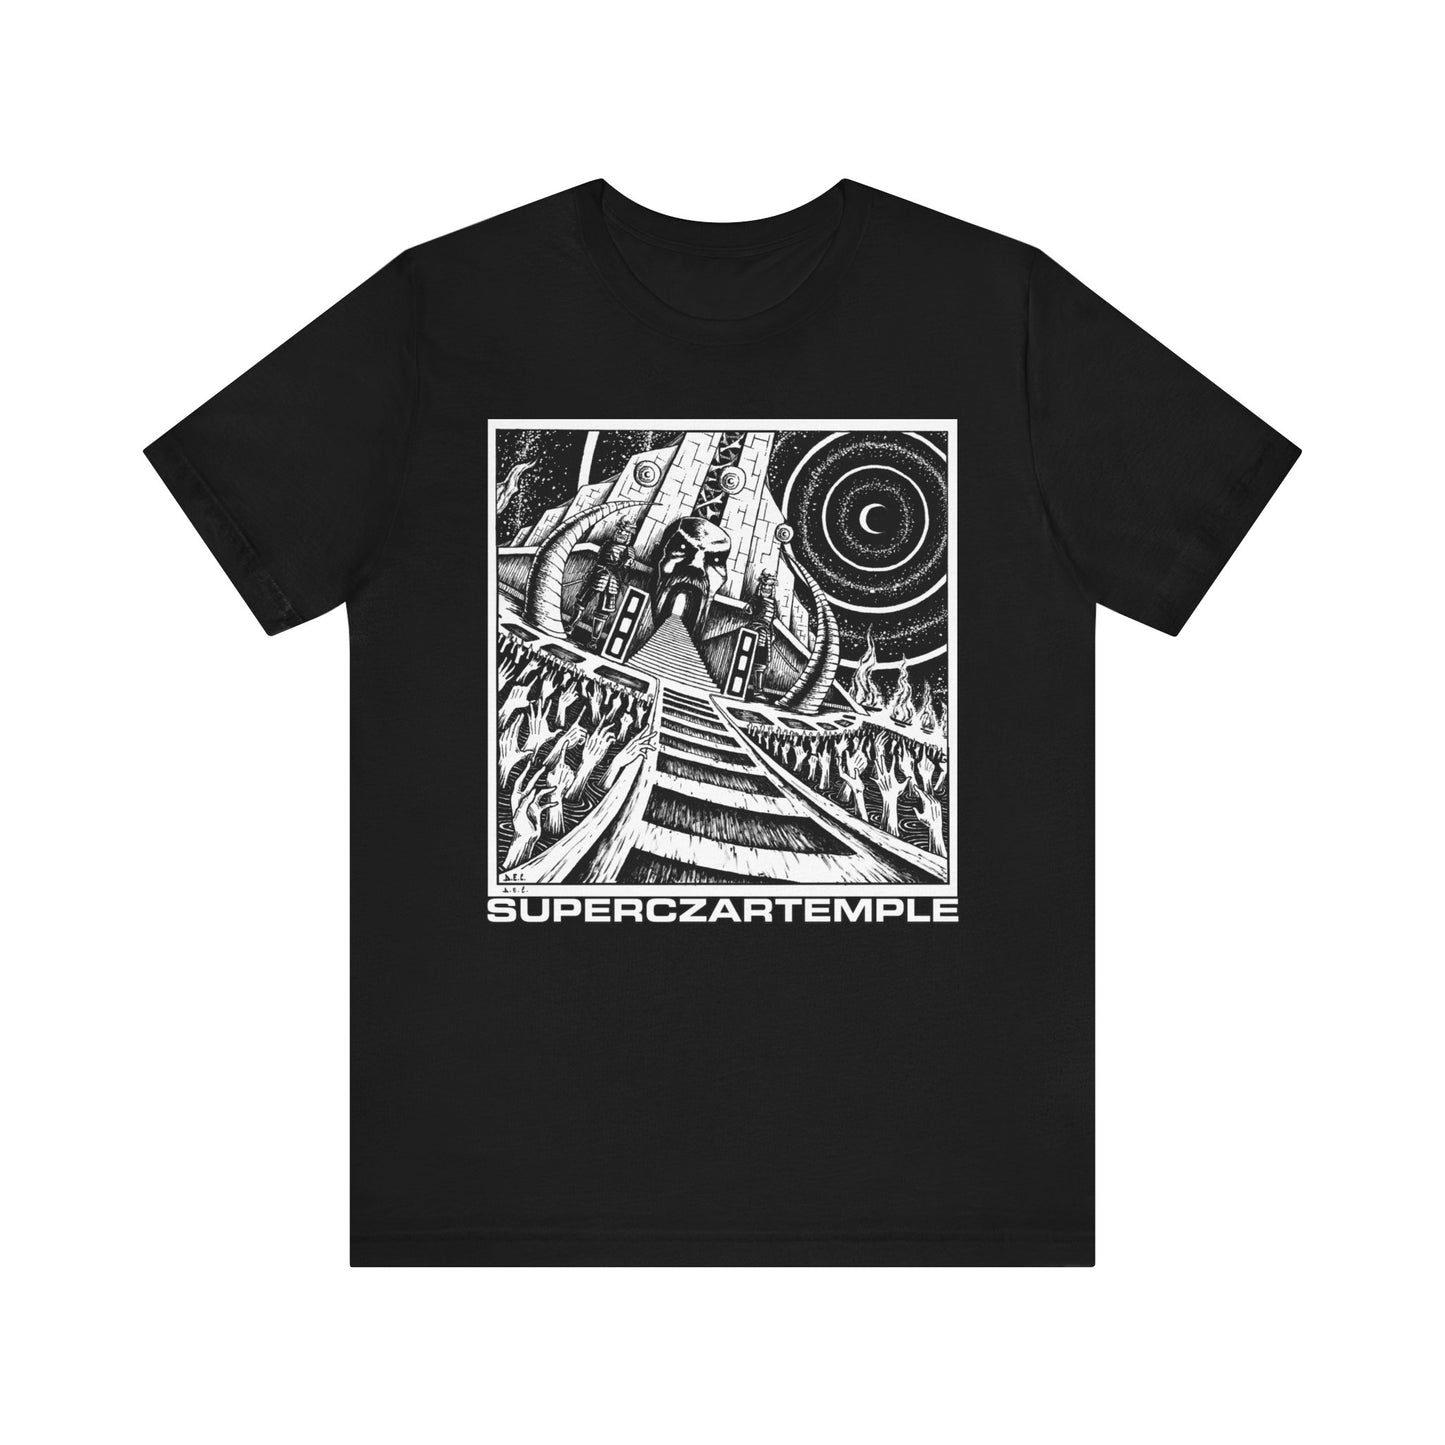 a superczartemple band tshirt featuring inked graphics by artist DEC (Davide Edoardo Cassano)